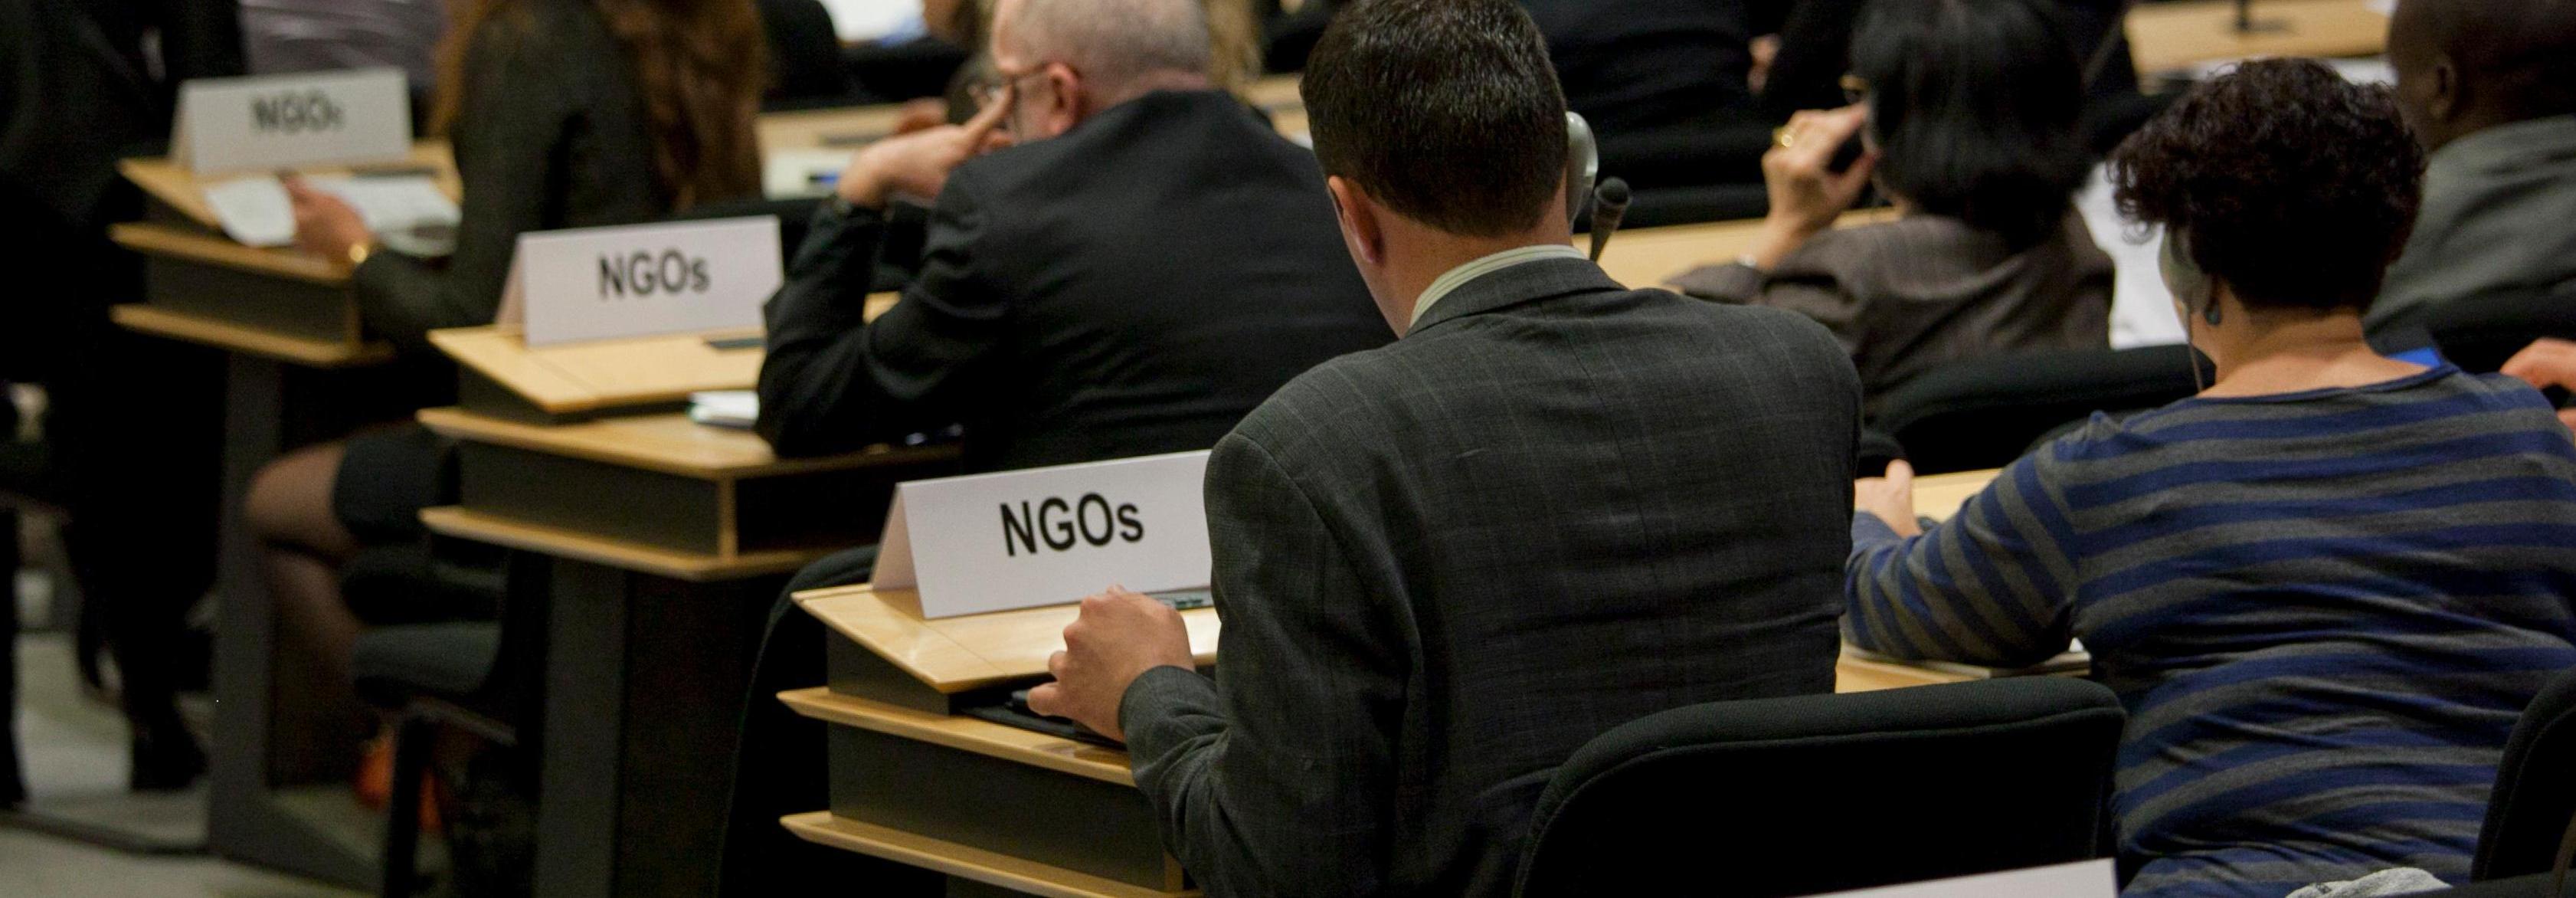 NGOs global submit